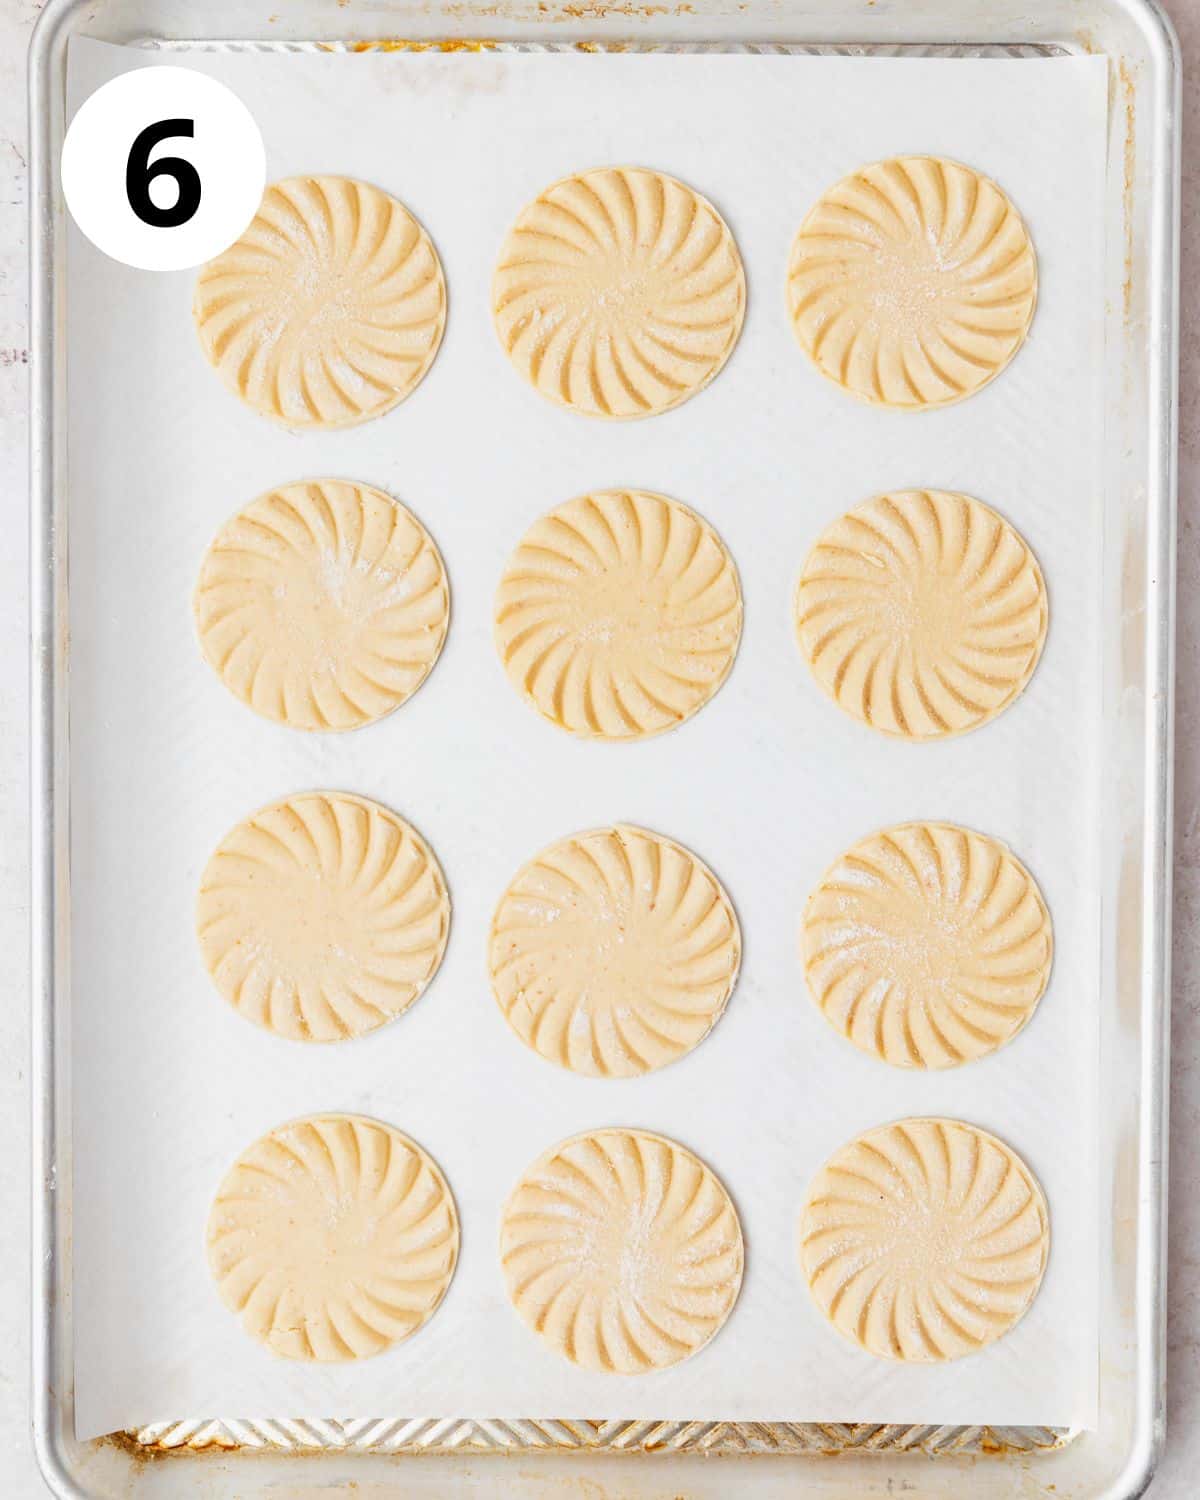 maple shortbread cookies on baking sheet before baking.